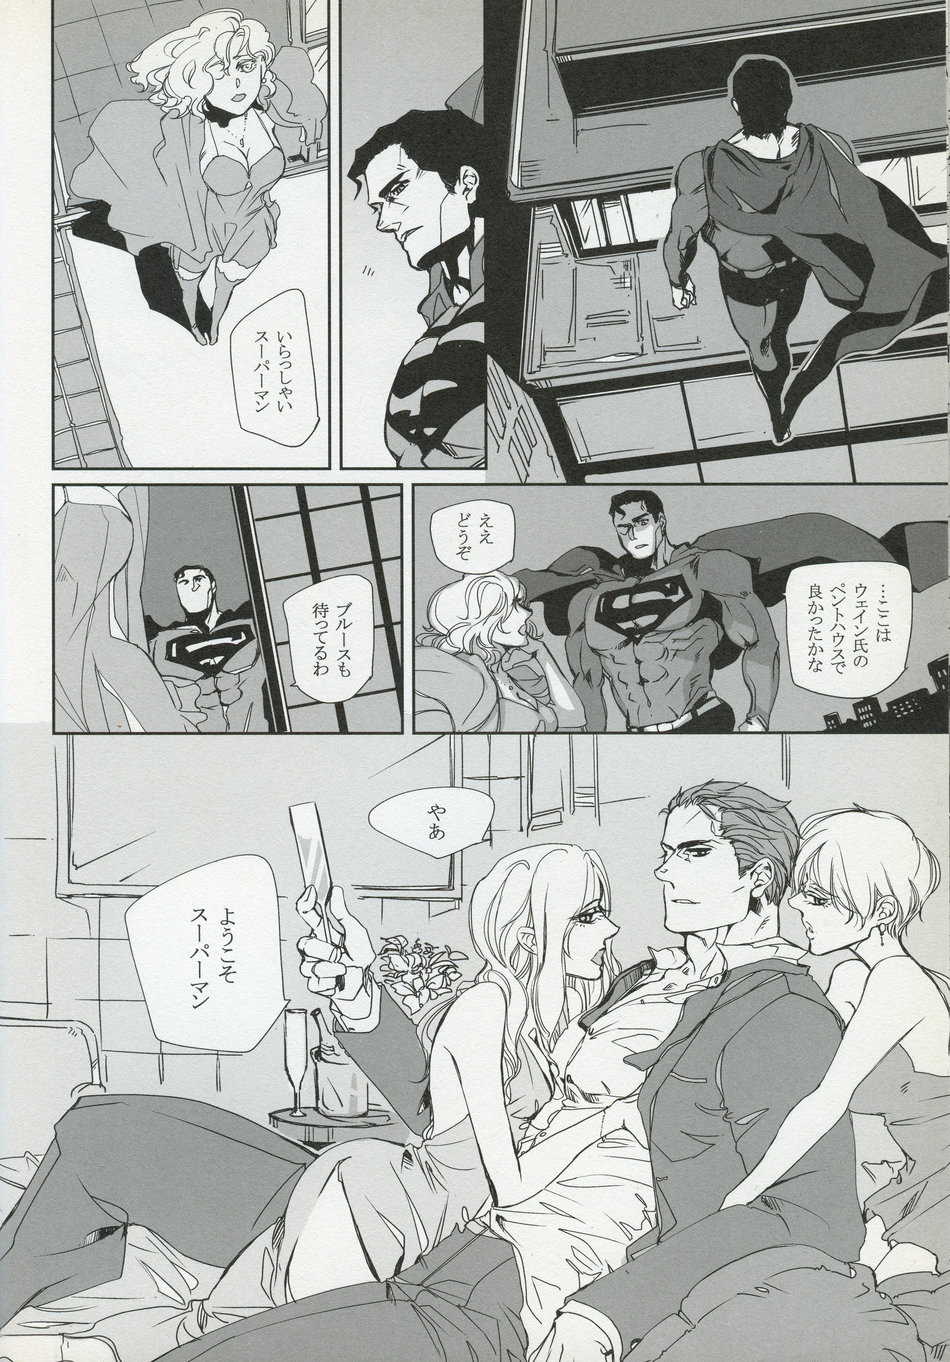 Nao ナオ Egodra エゴドラ DC Comics Passion of the B Superman Clark Kent x Batman Bruce Wayne